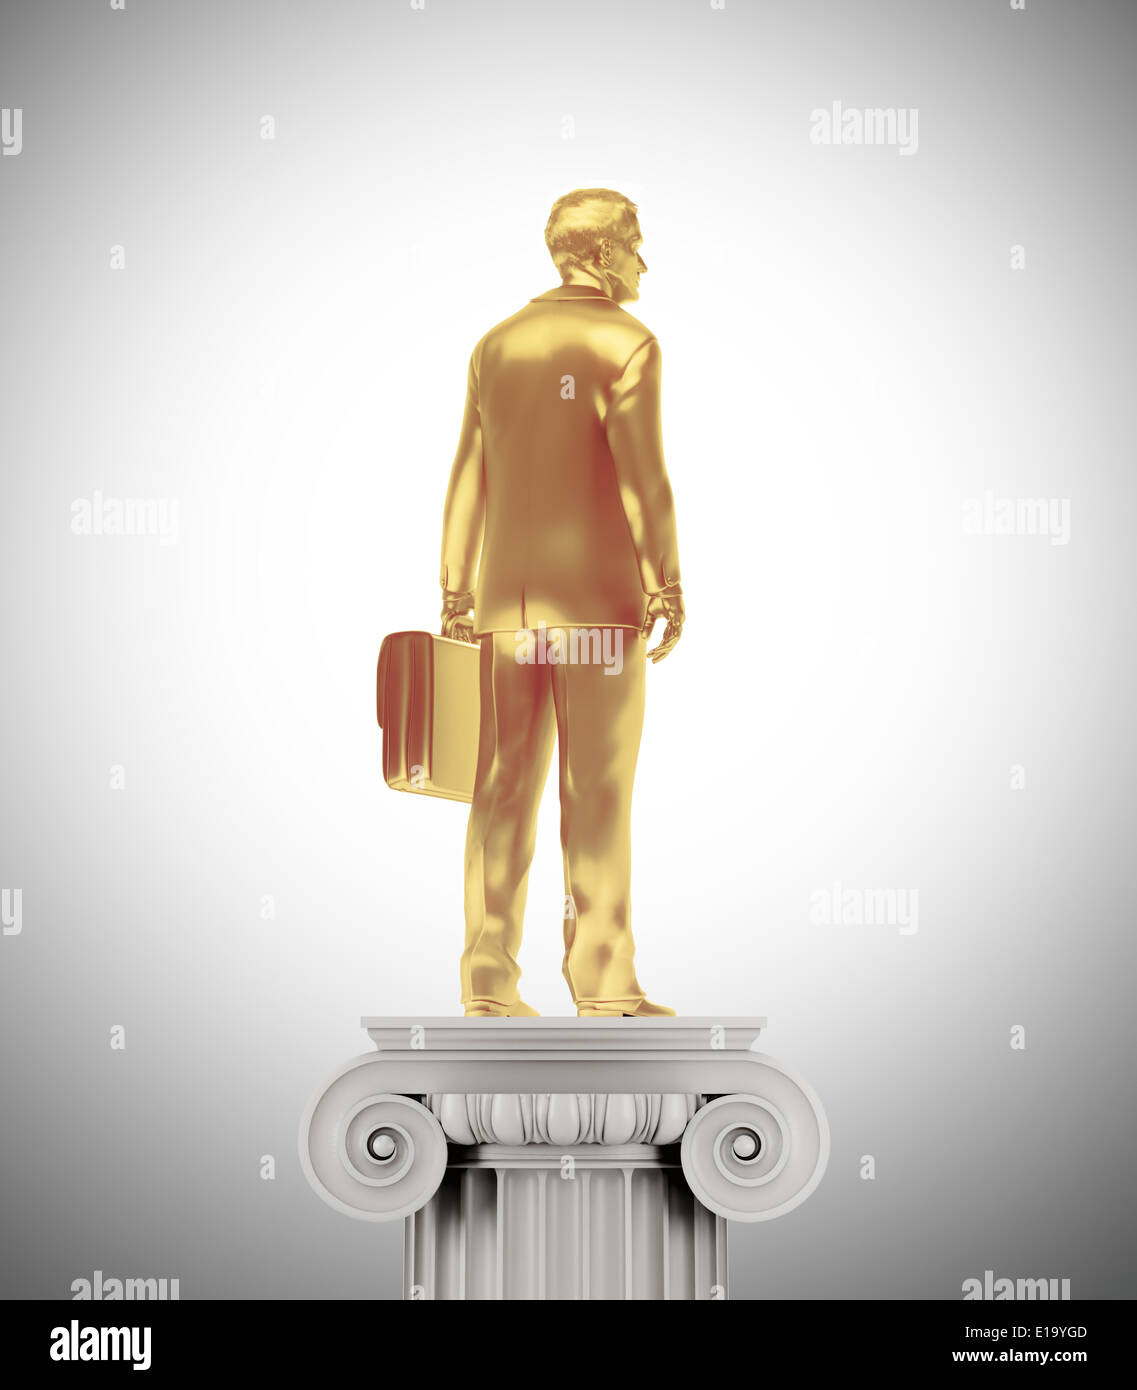 Golden businessman statue on a antique pedestal Stock Photo